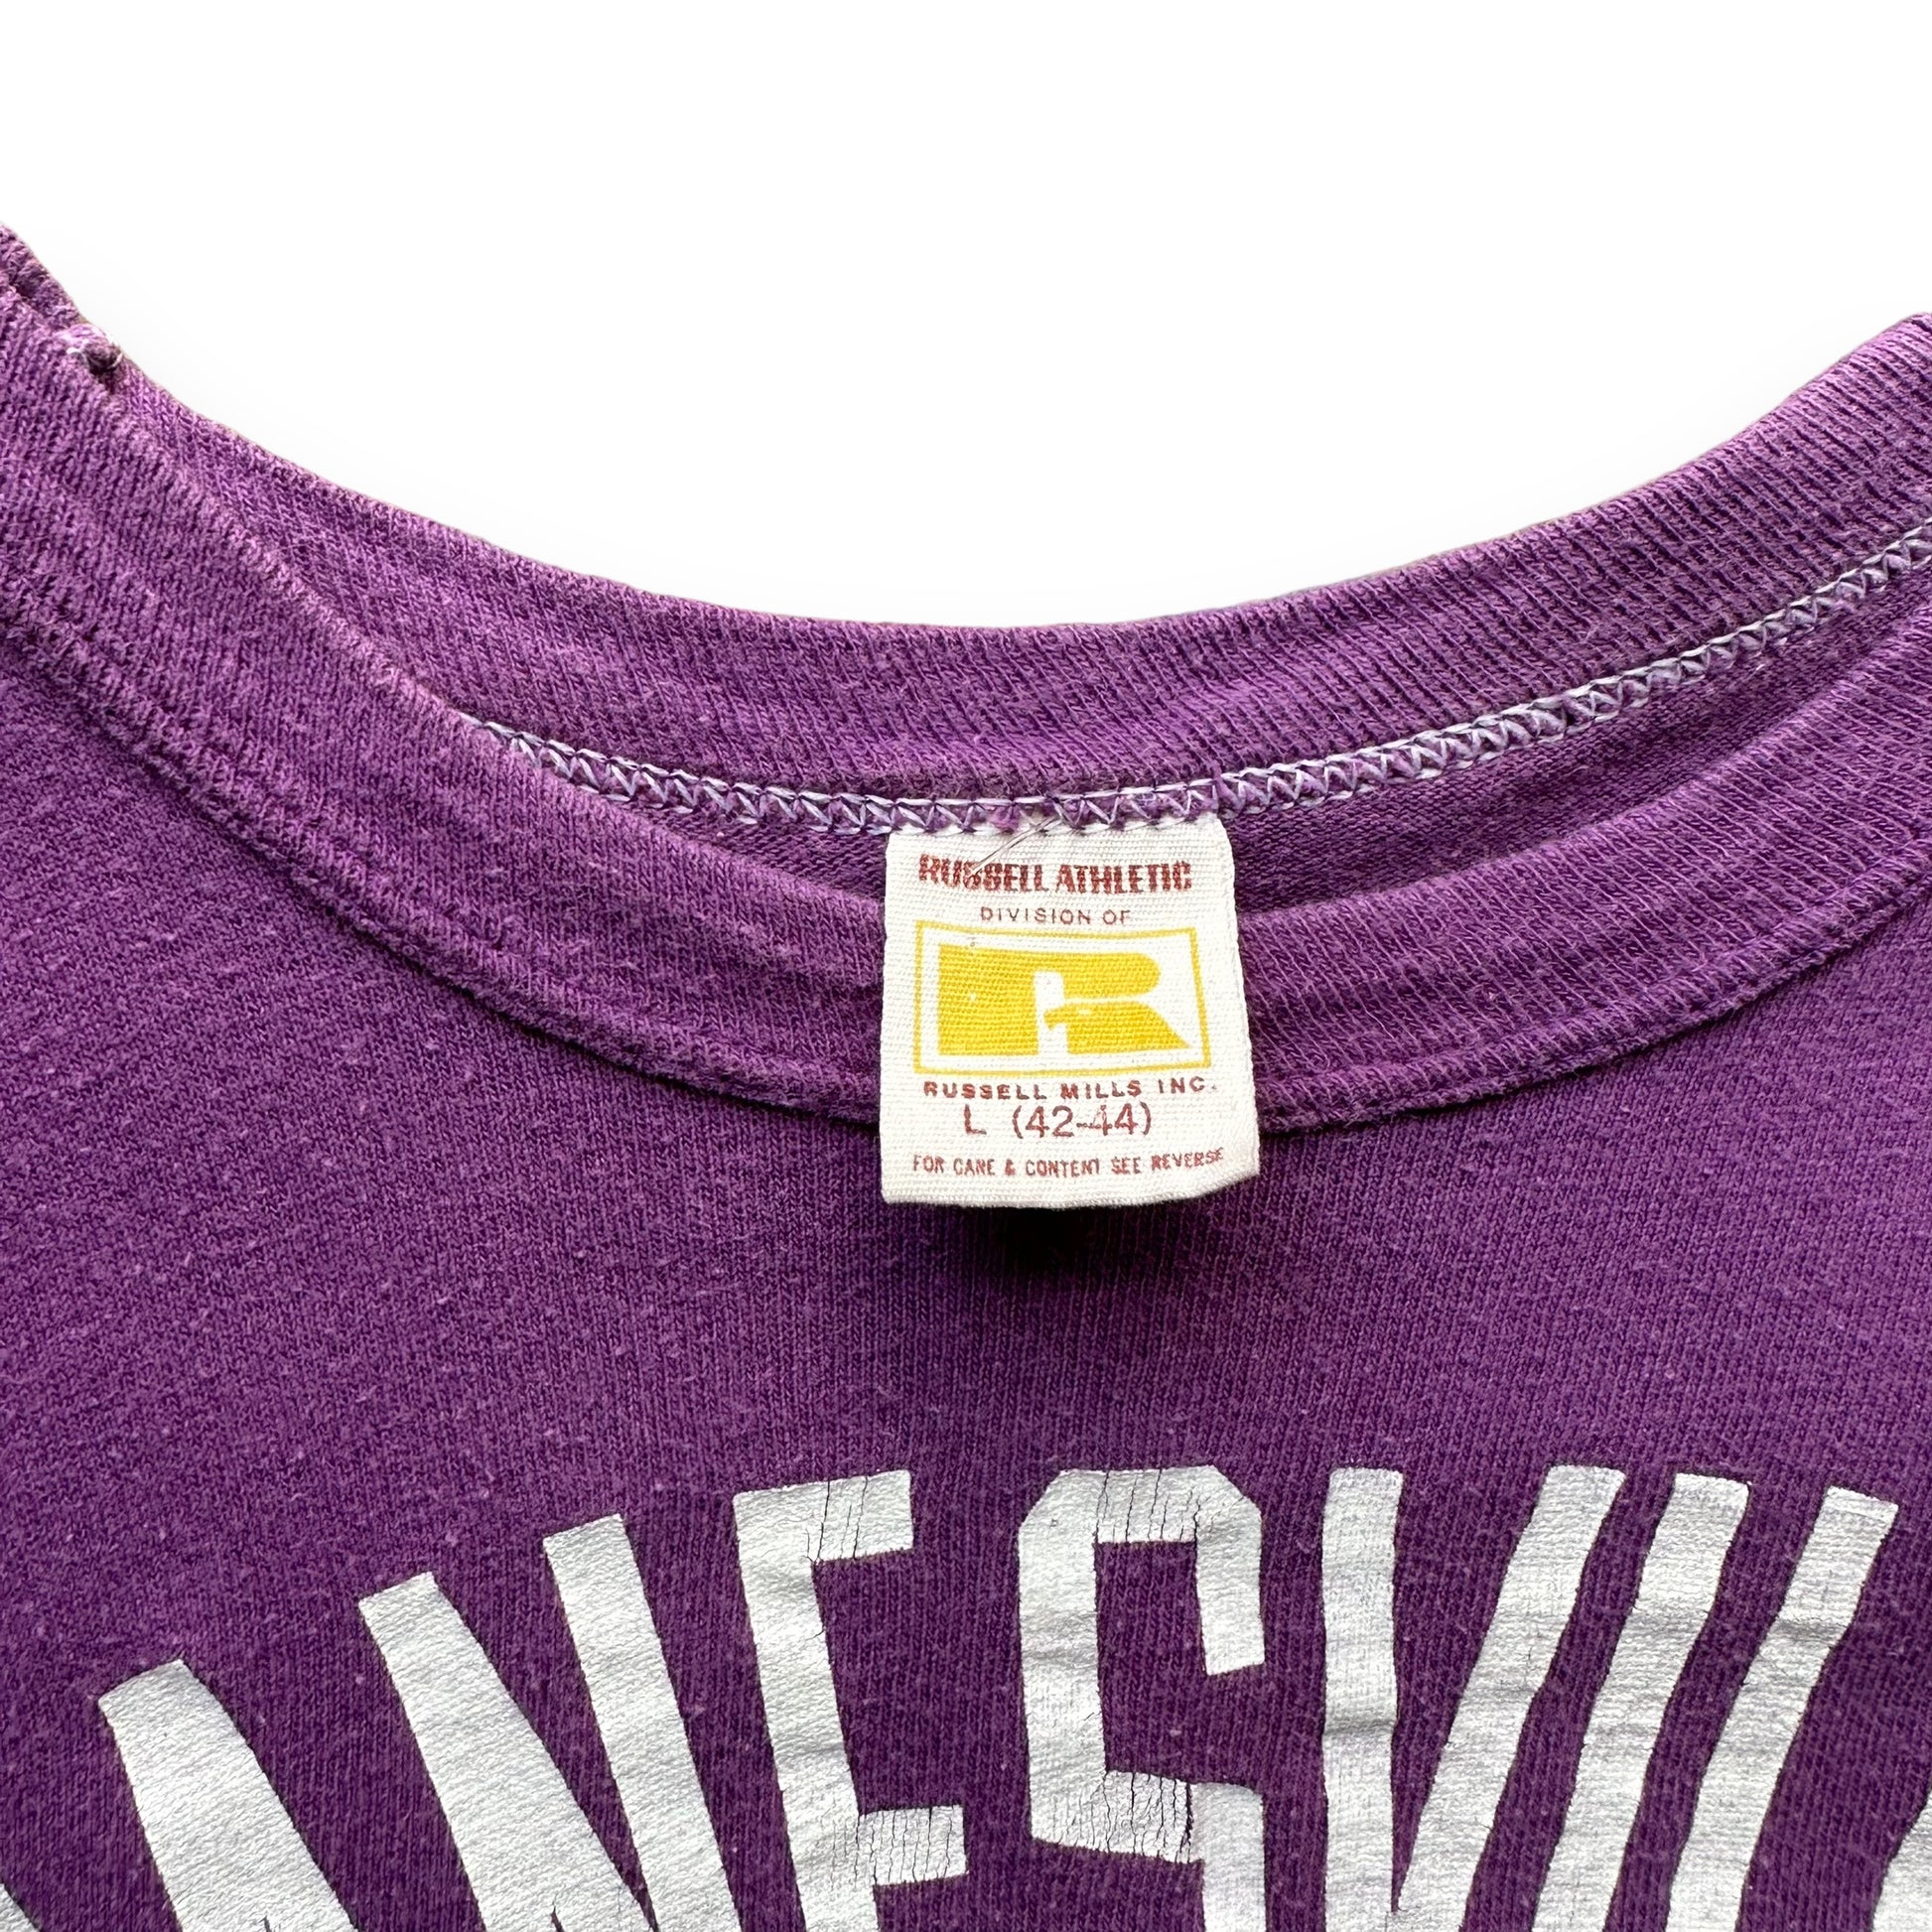 Tag Detail on Vintage Russell Athletic Janesville Tigers Tee SZ L | Vintage T-Shirts Seattle | Barn Owl Vintage Tees Seattle